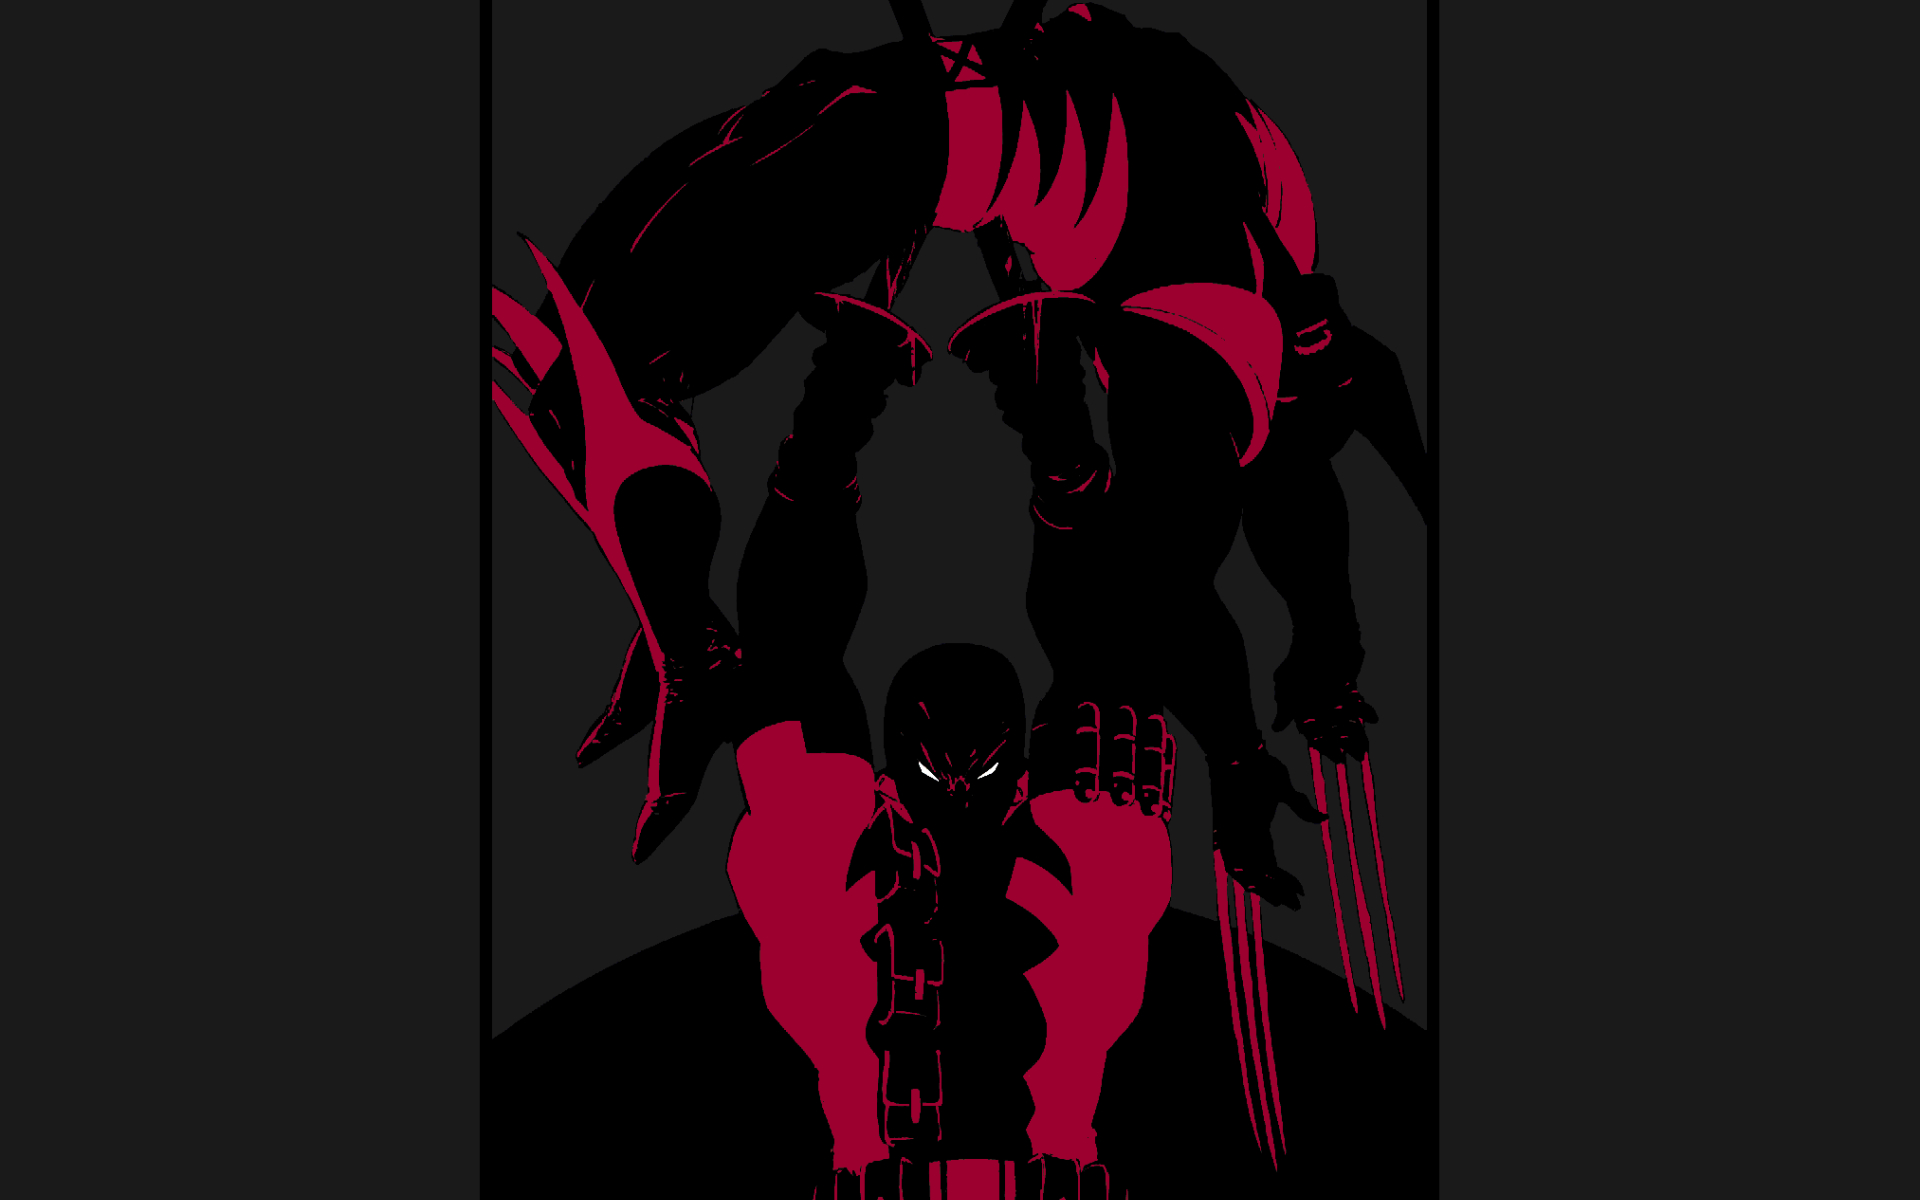 X-Men, Wolverine, Deadpool Wade Wilson - desktop wallpaper